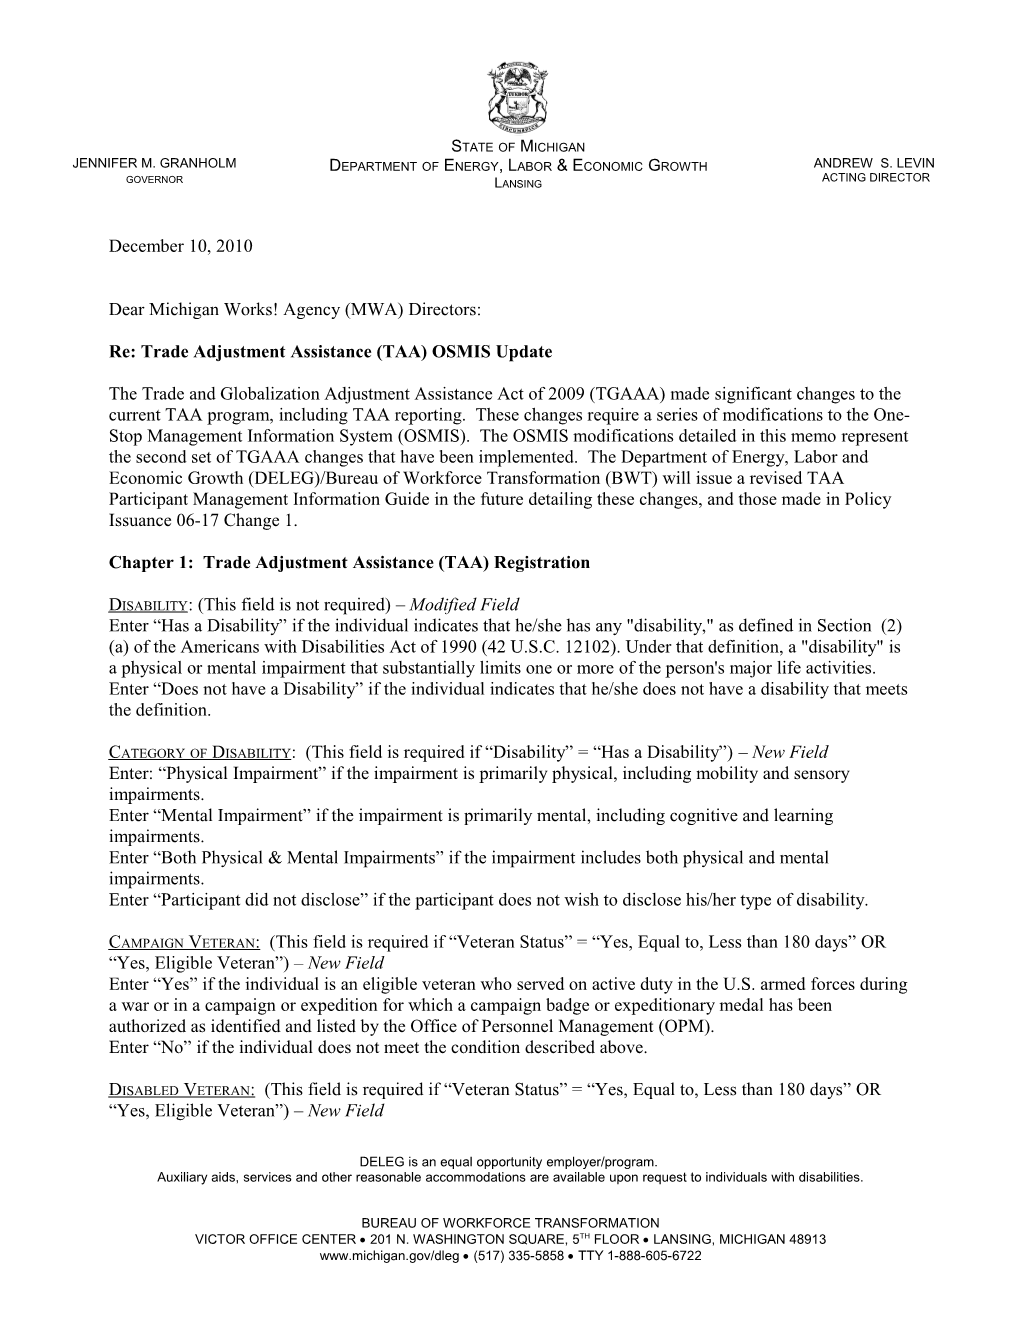 Re: Trade Adjustment Assistance (TAA) OSMIS Update